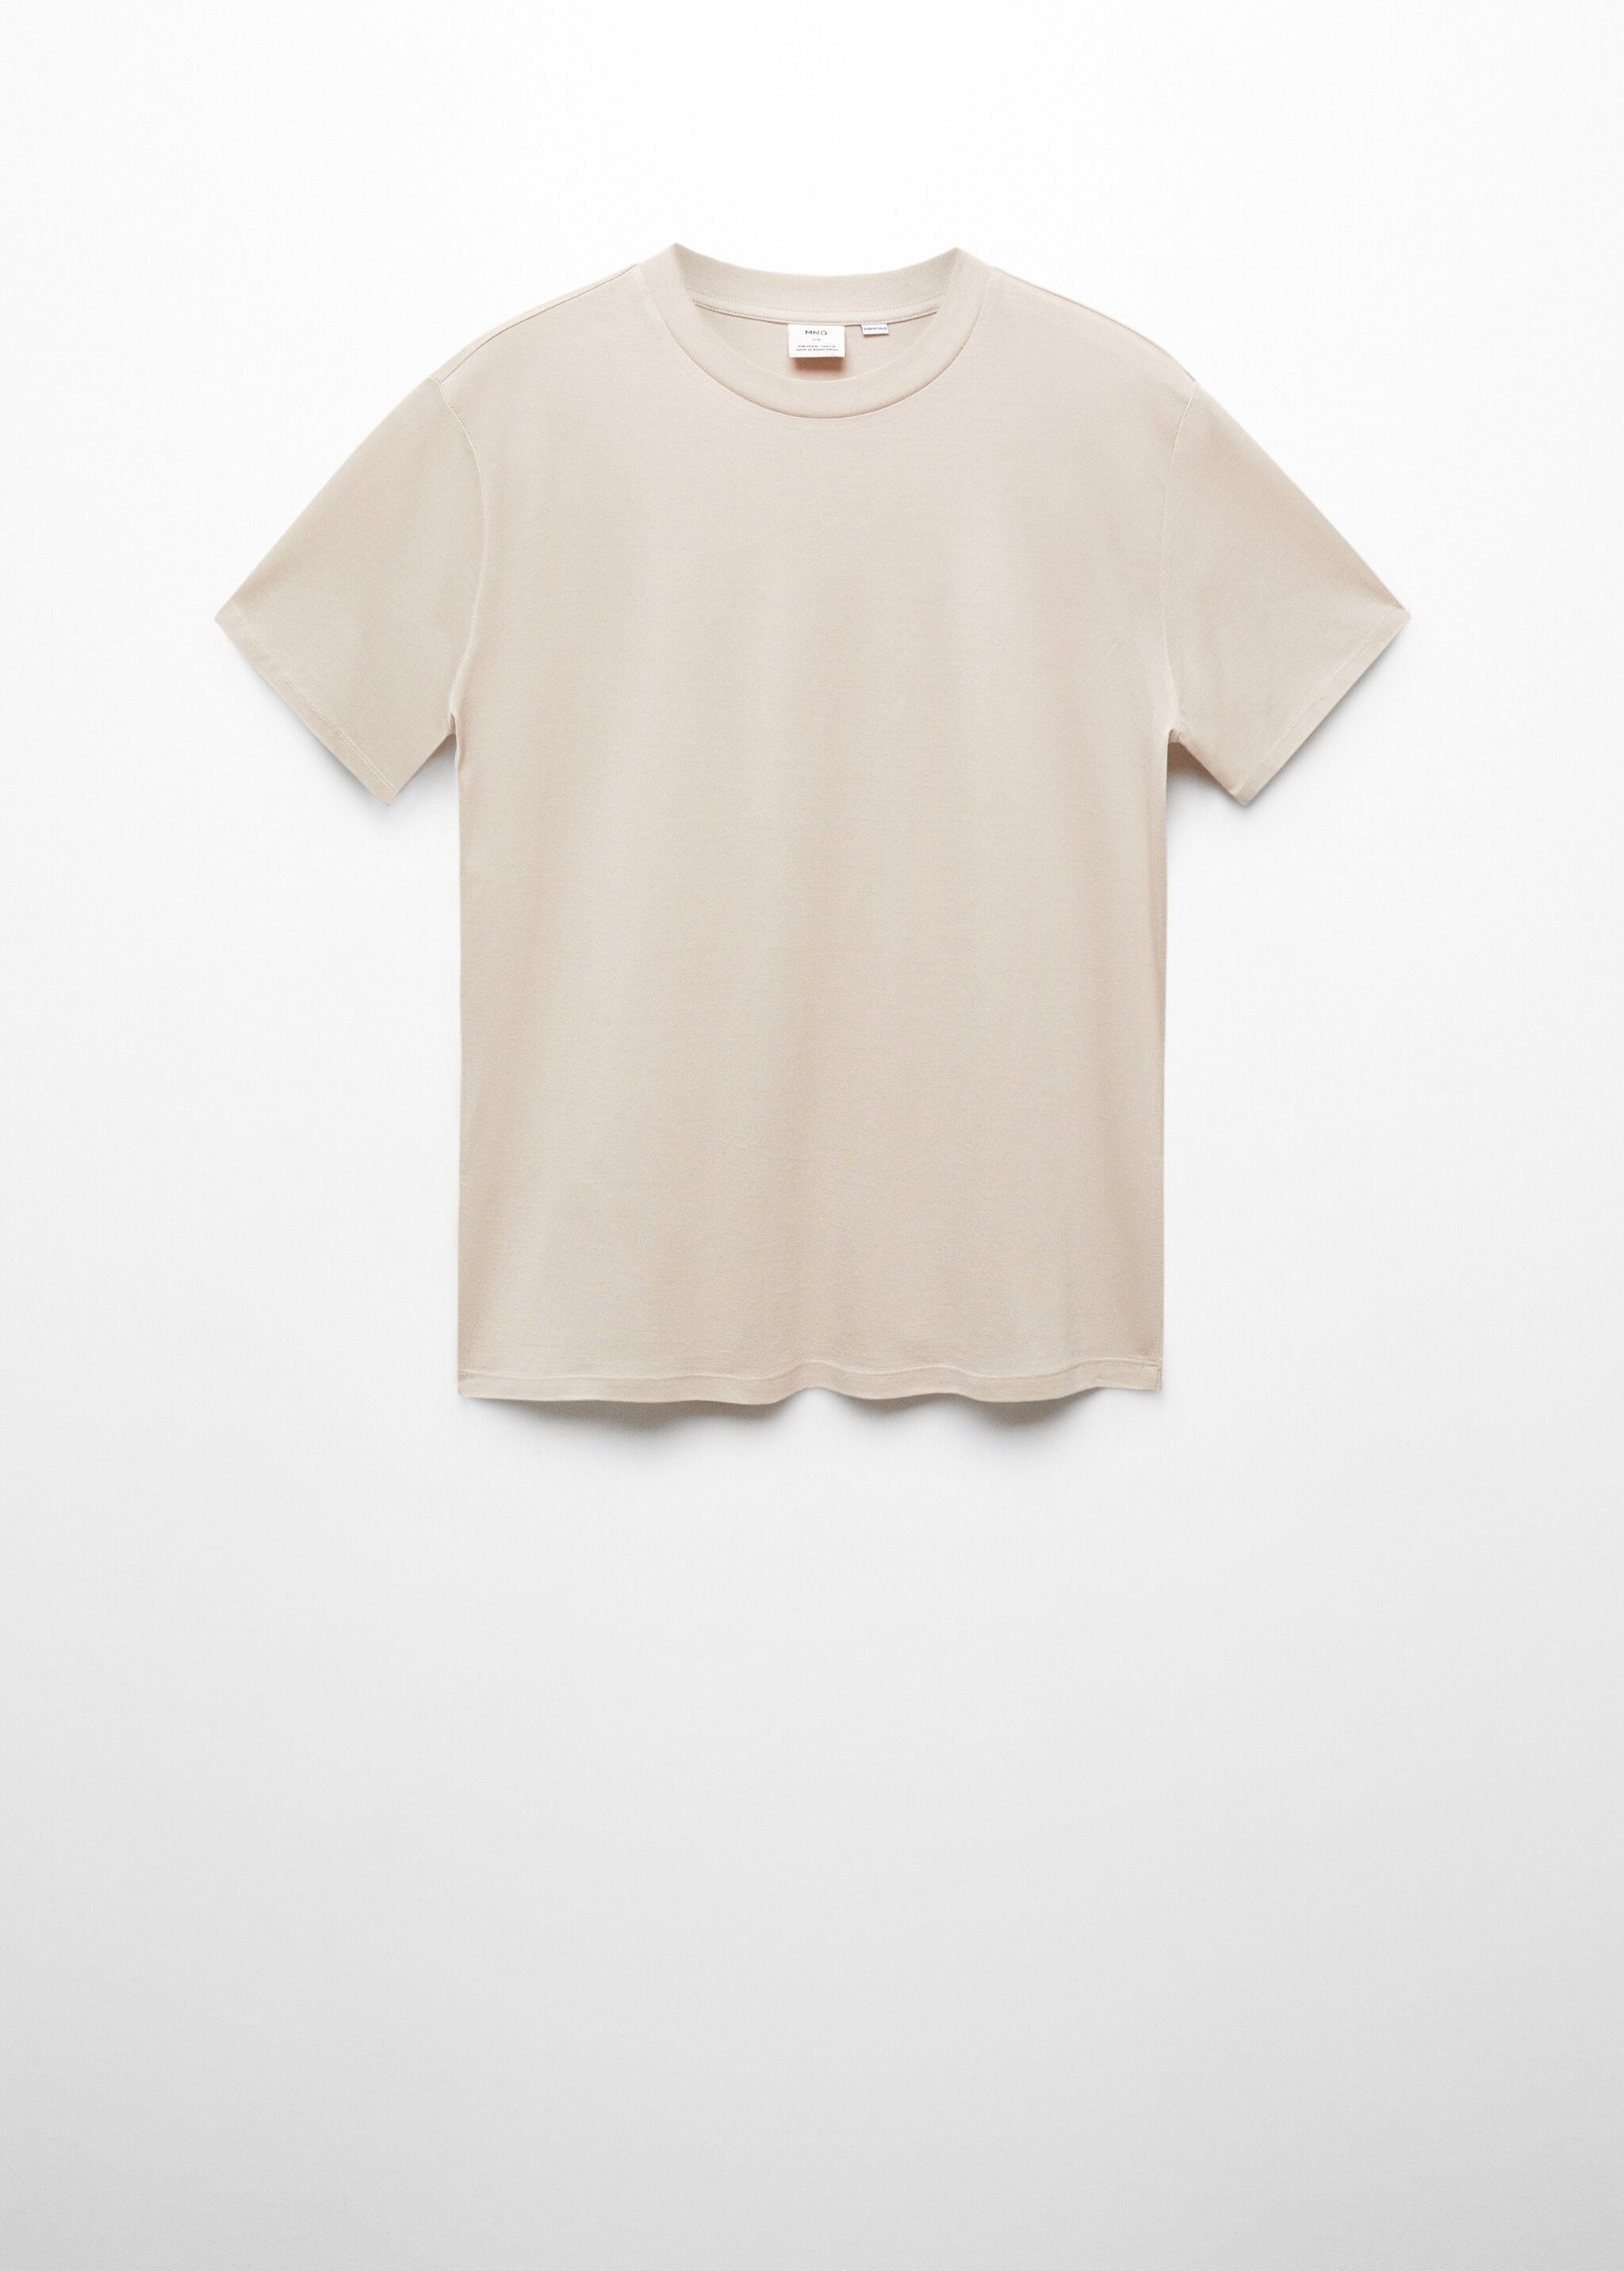 Camiseta slim fit mercerizada - Artículo sin modelo